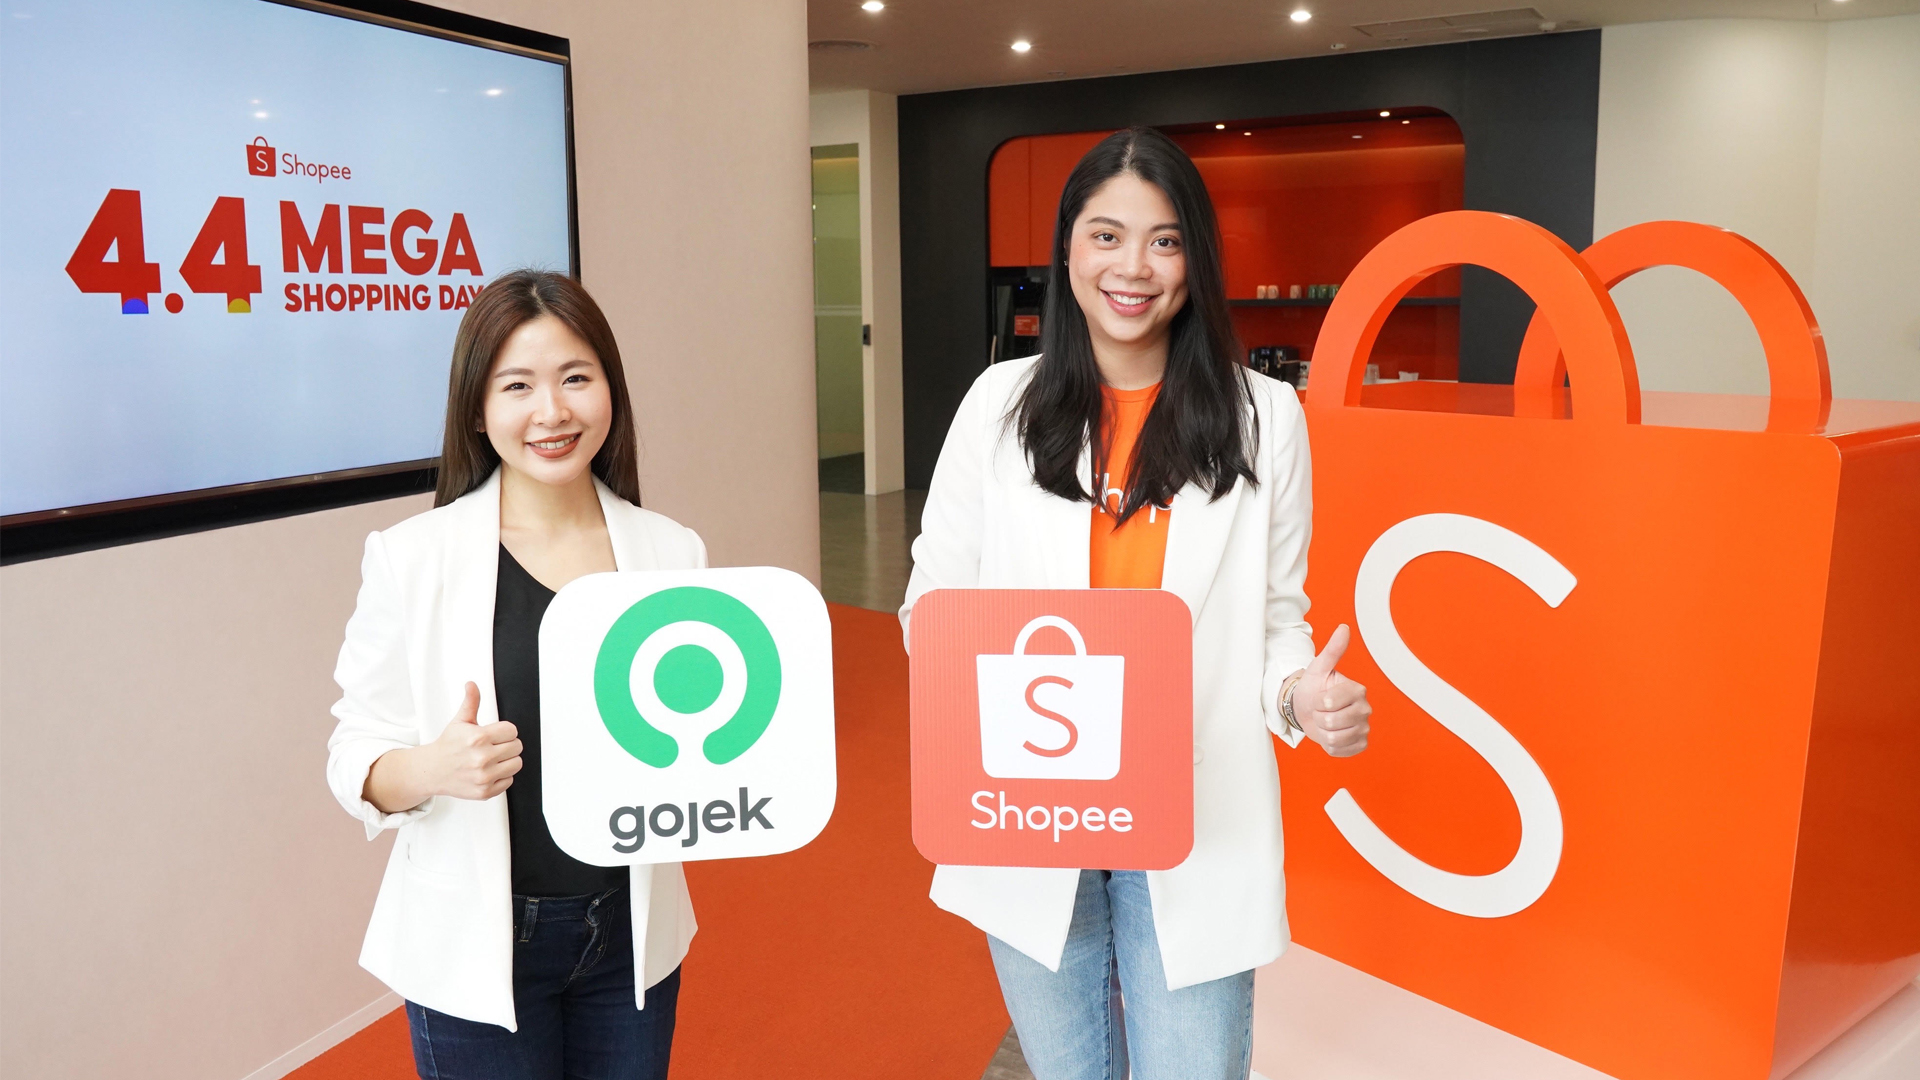 Gojek ผนึก Shopee จัดกิจกรรมและโปรโมชันสุดพิเศษฉลองมหกรรม Shopee 4.4 Mega Shopping Day